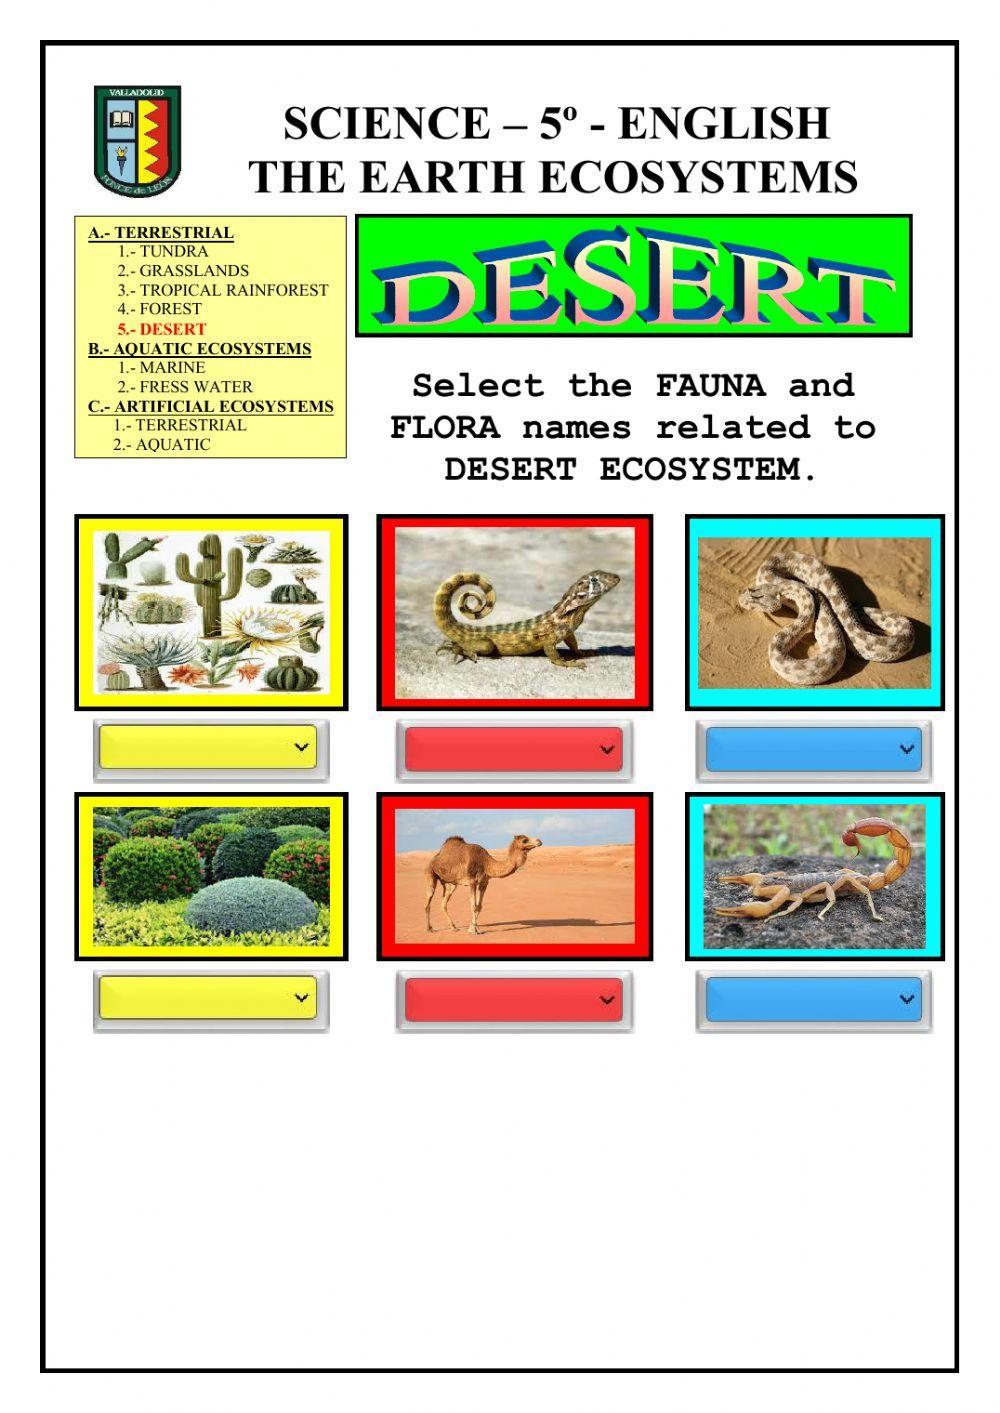 Ecosystems: terrestrial - desert